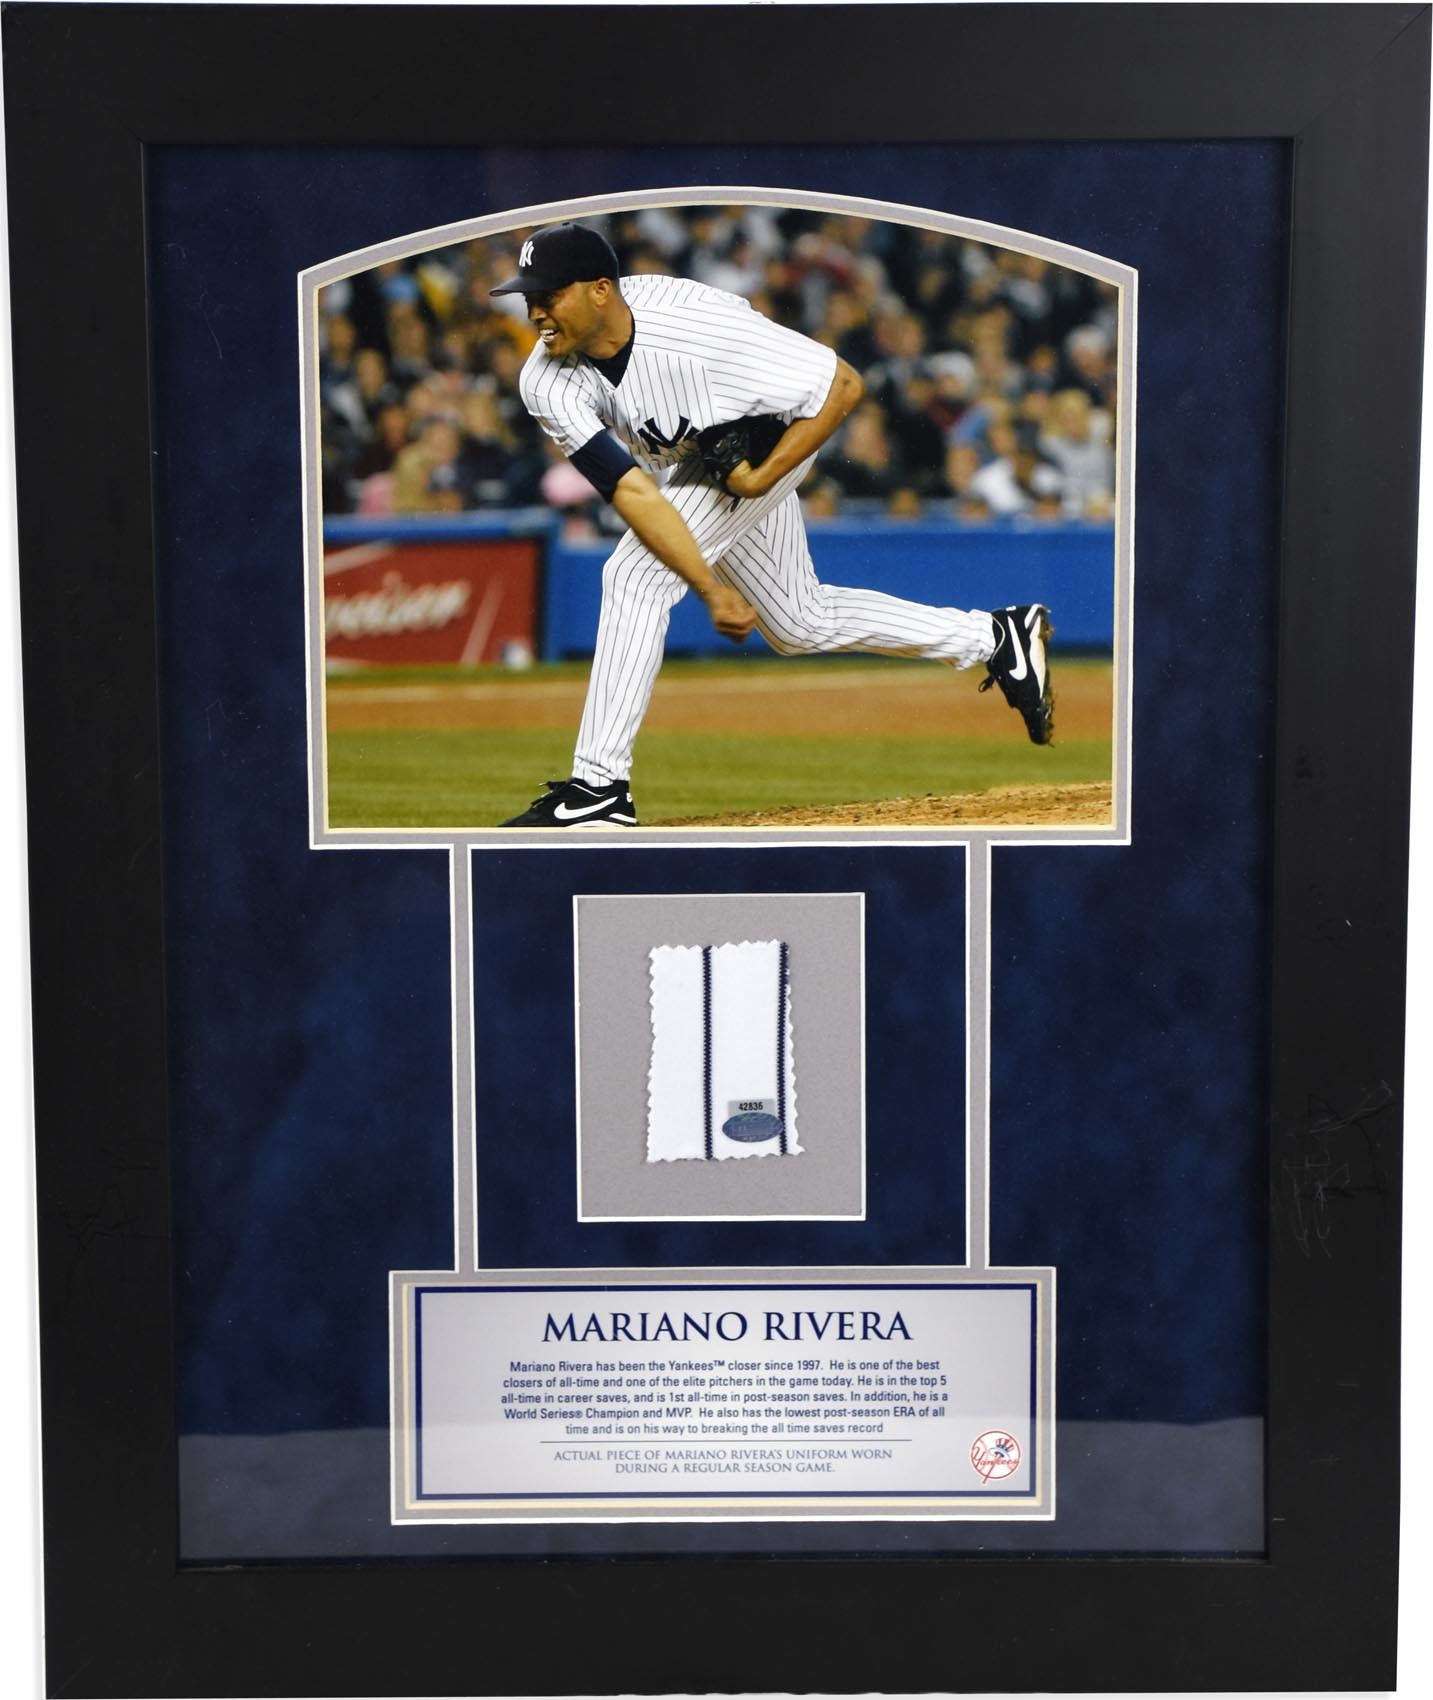 Baseball Autographs - Mariano Rivera Signed Memorabilia Collection